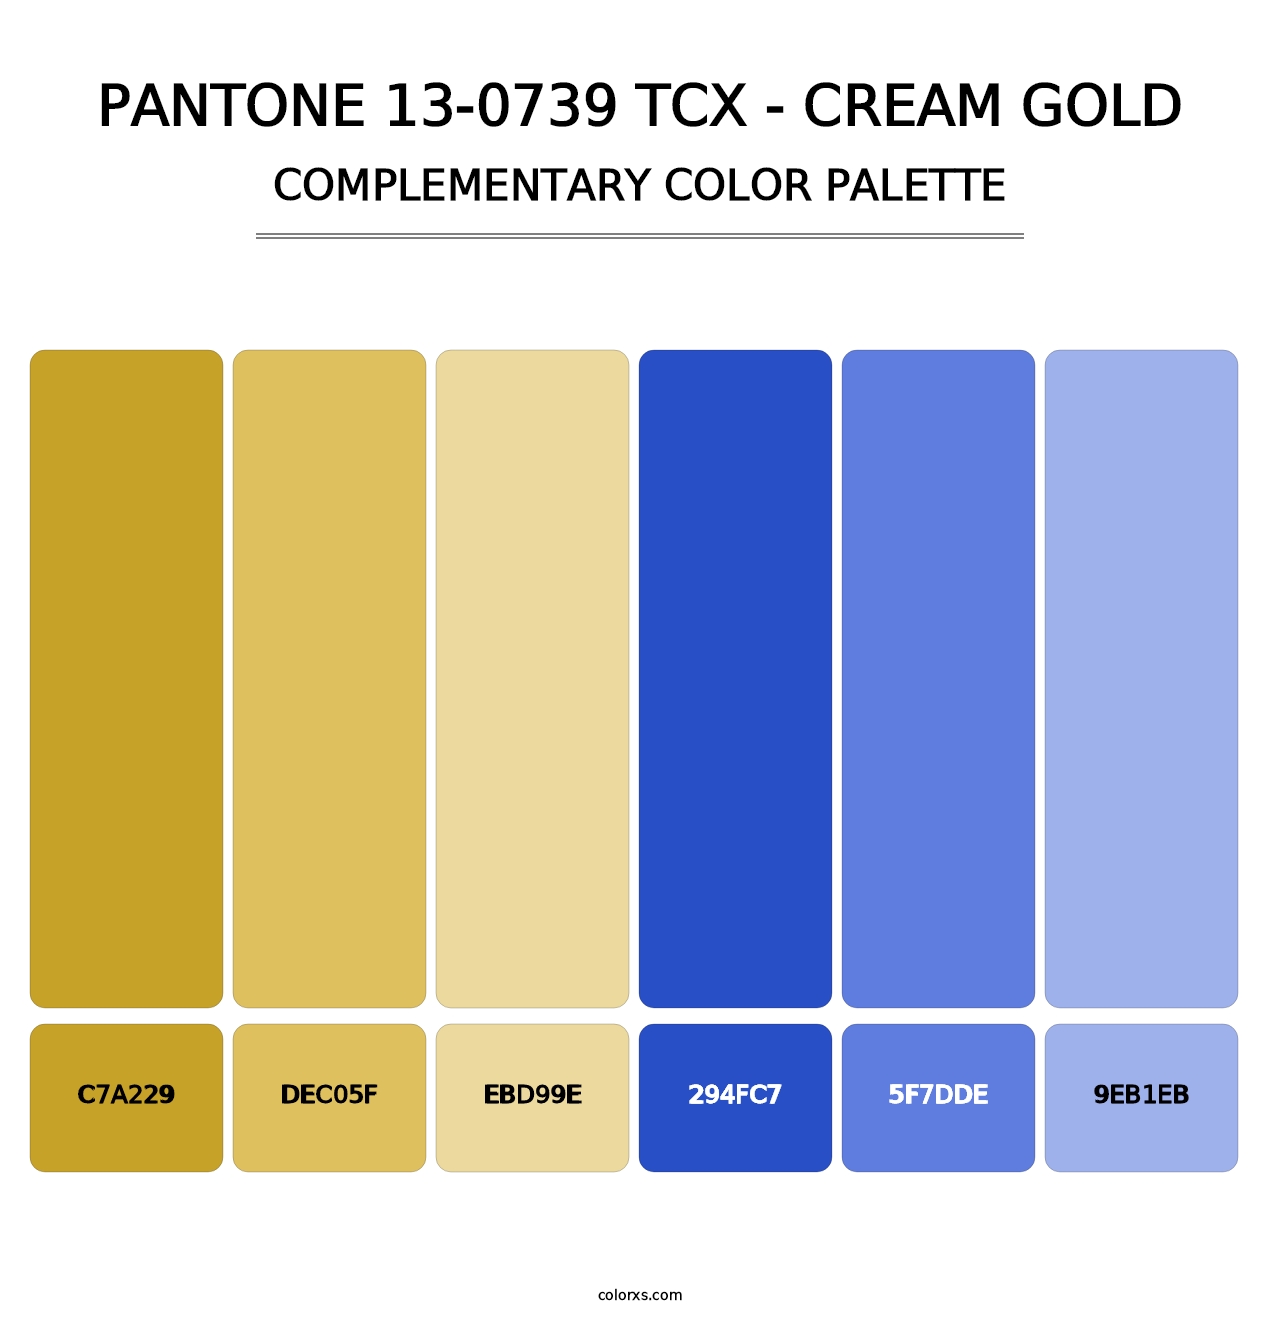 PANTONE 13-0739 TCX - Cream Gold - Complementary Color Palette